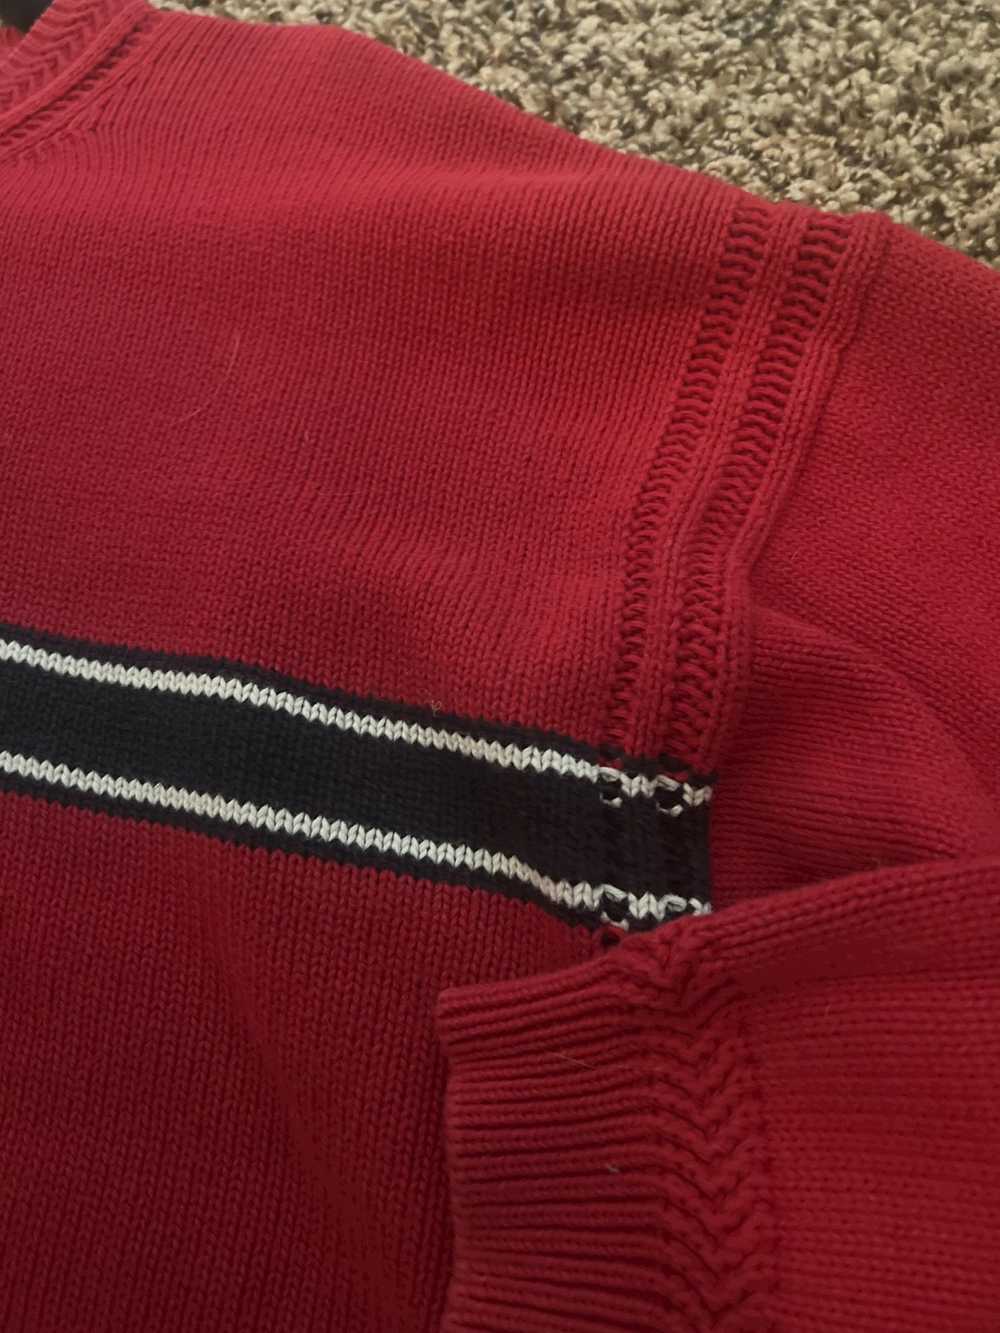 Nautica Red stripped nautica sweater - image 3